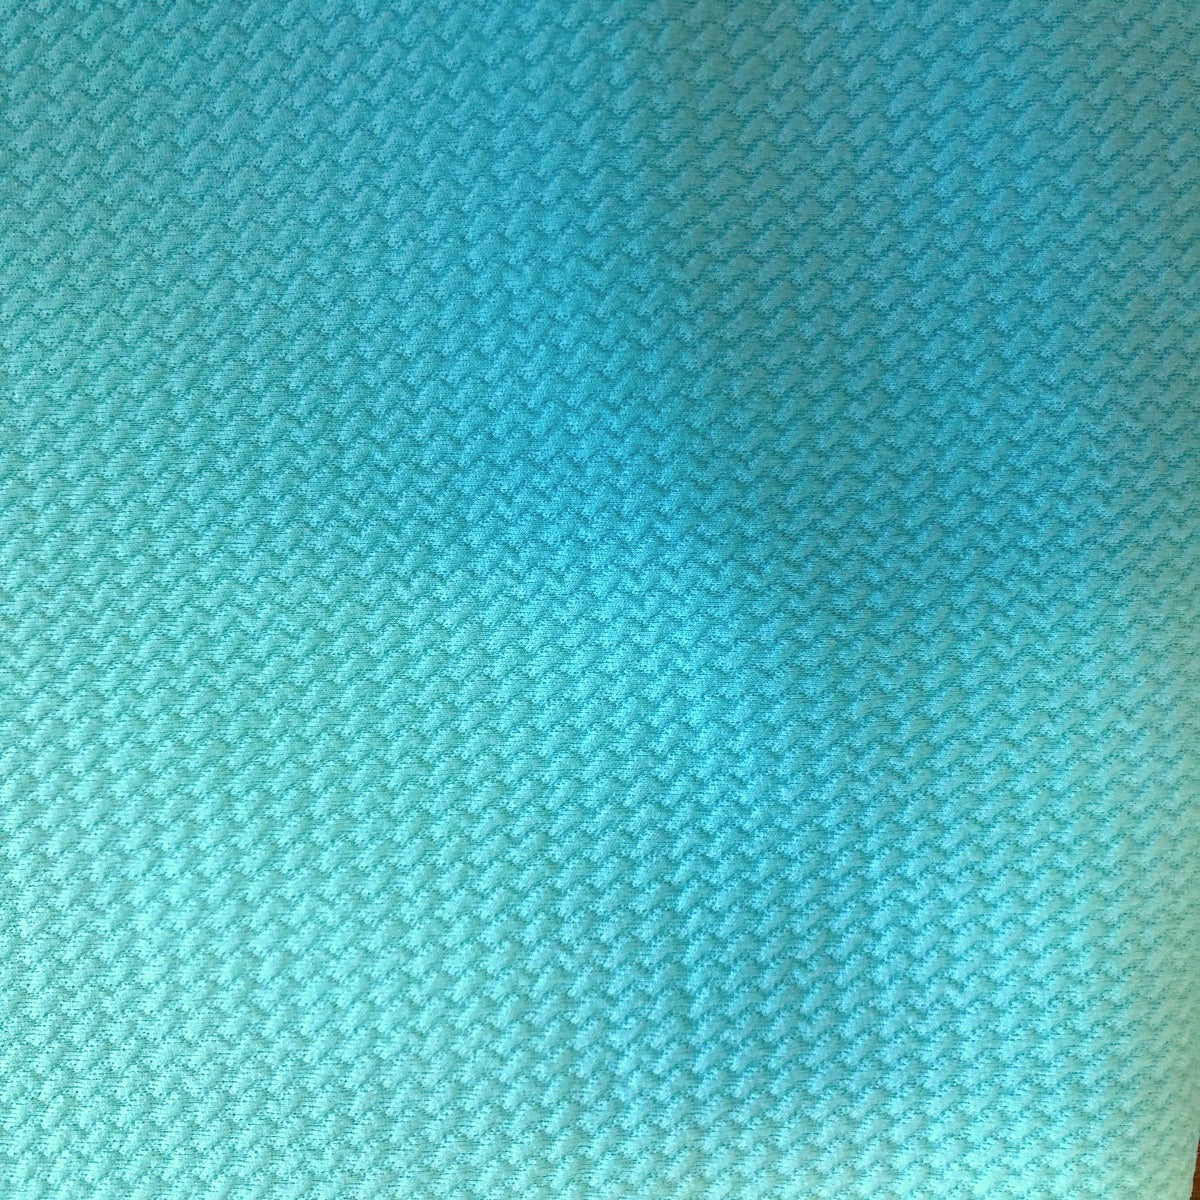 Turquoise Bullet Texture Liverpool Fabric - Fashion Fabrics Los Angeles 